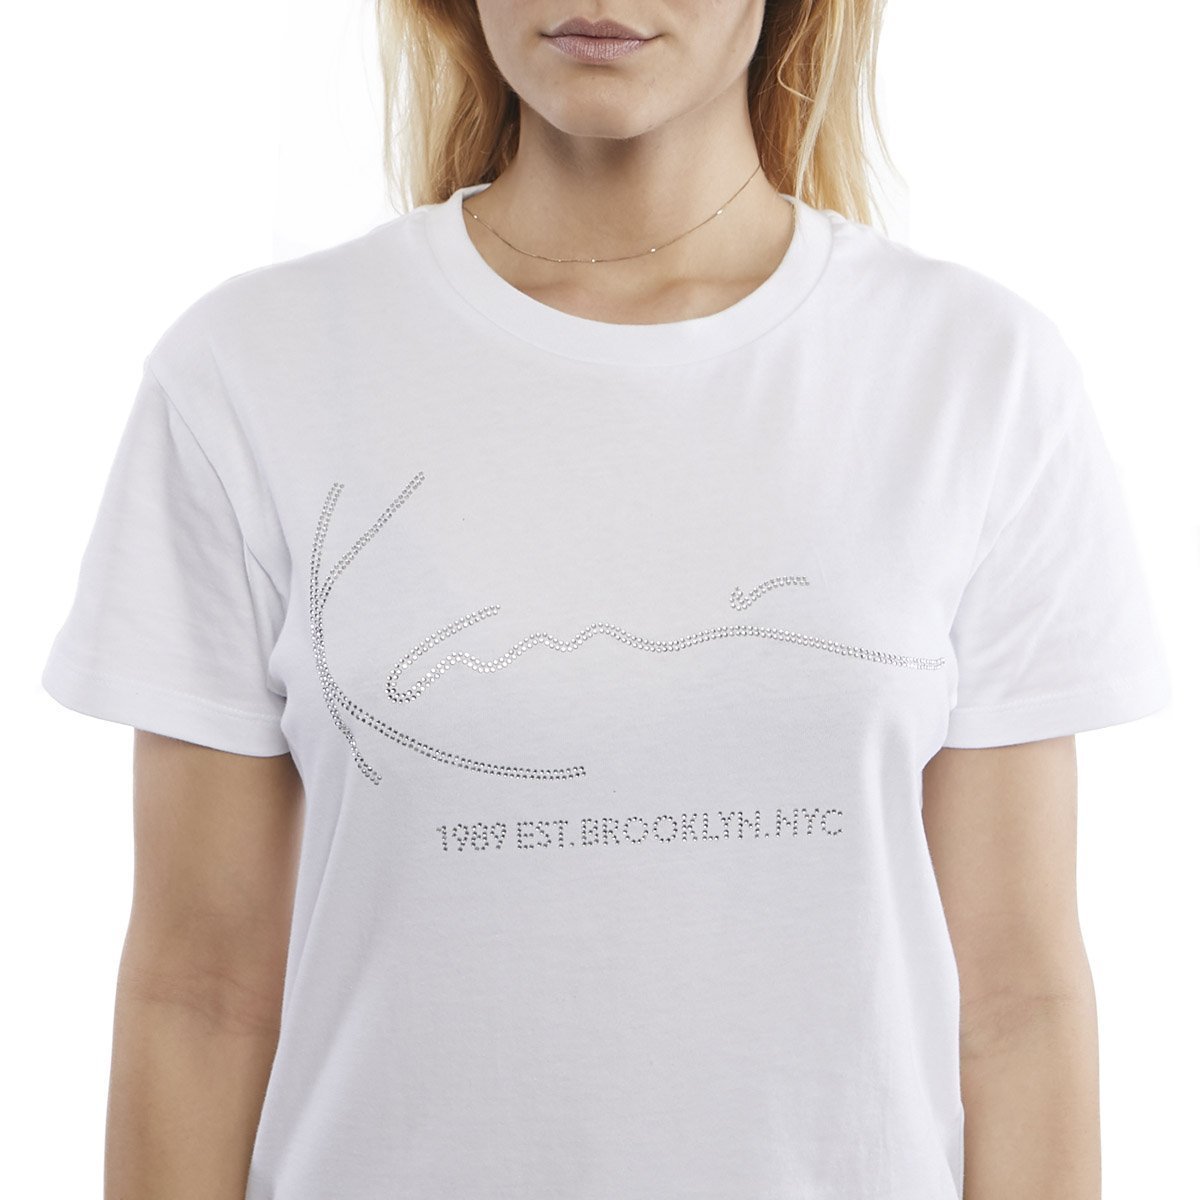 WMNS T-shirt Karl Kani Signature Tee white/silver | Bludshop.com